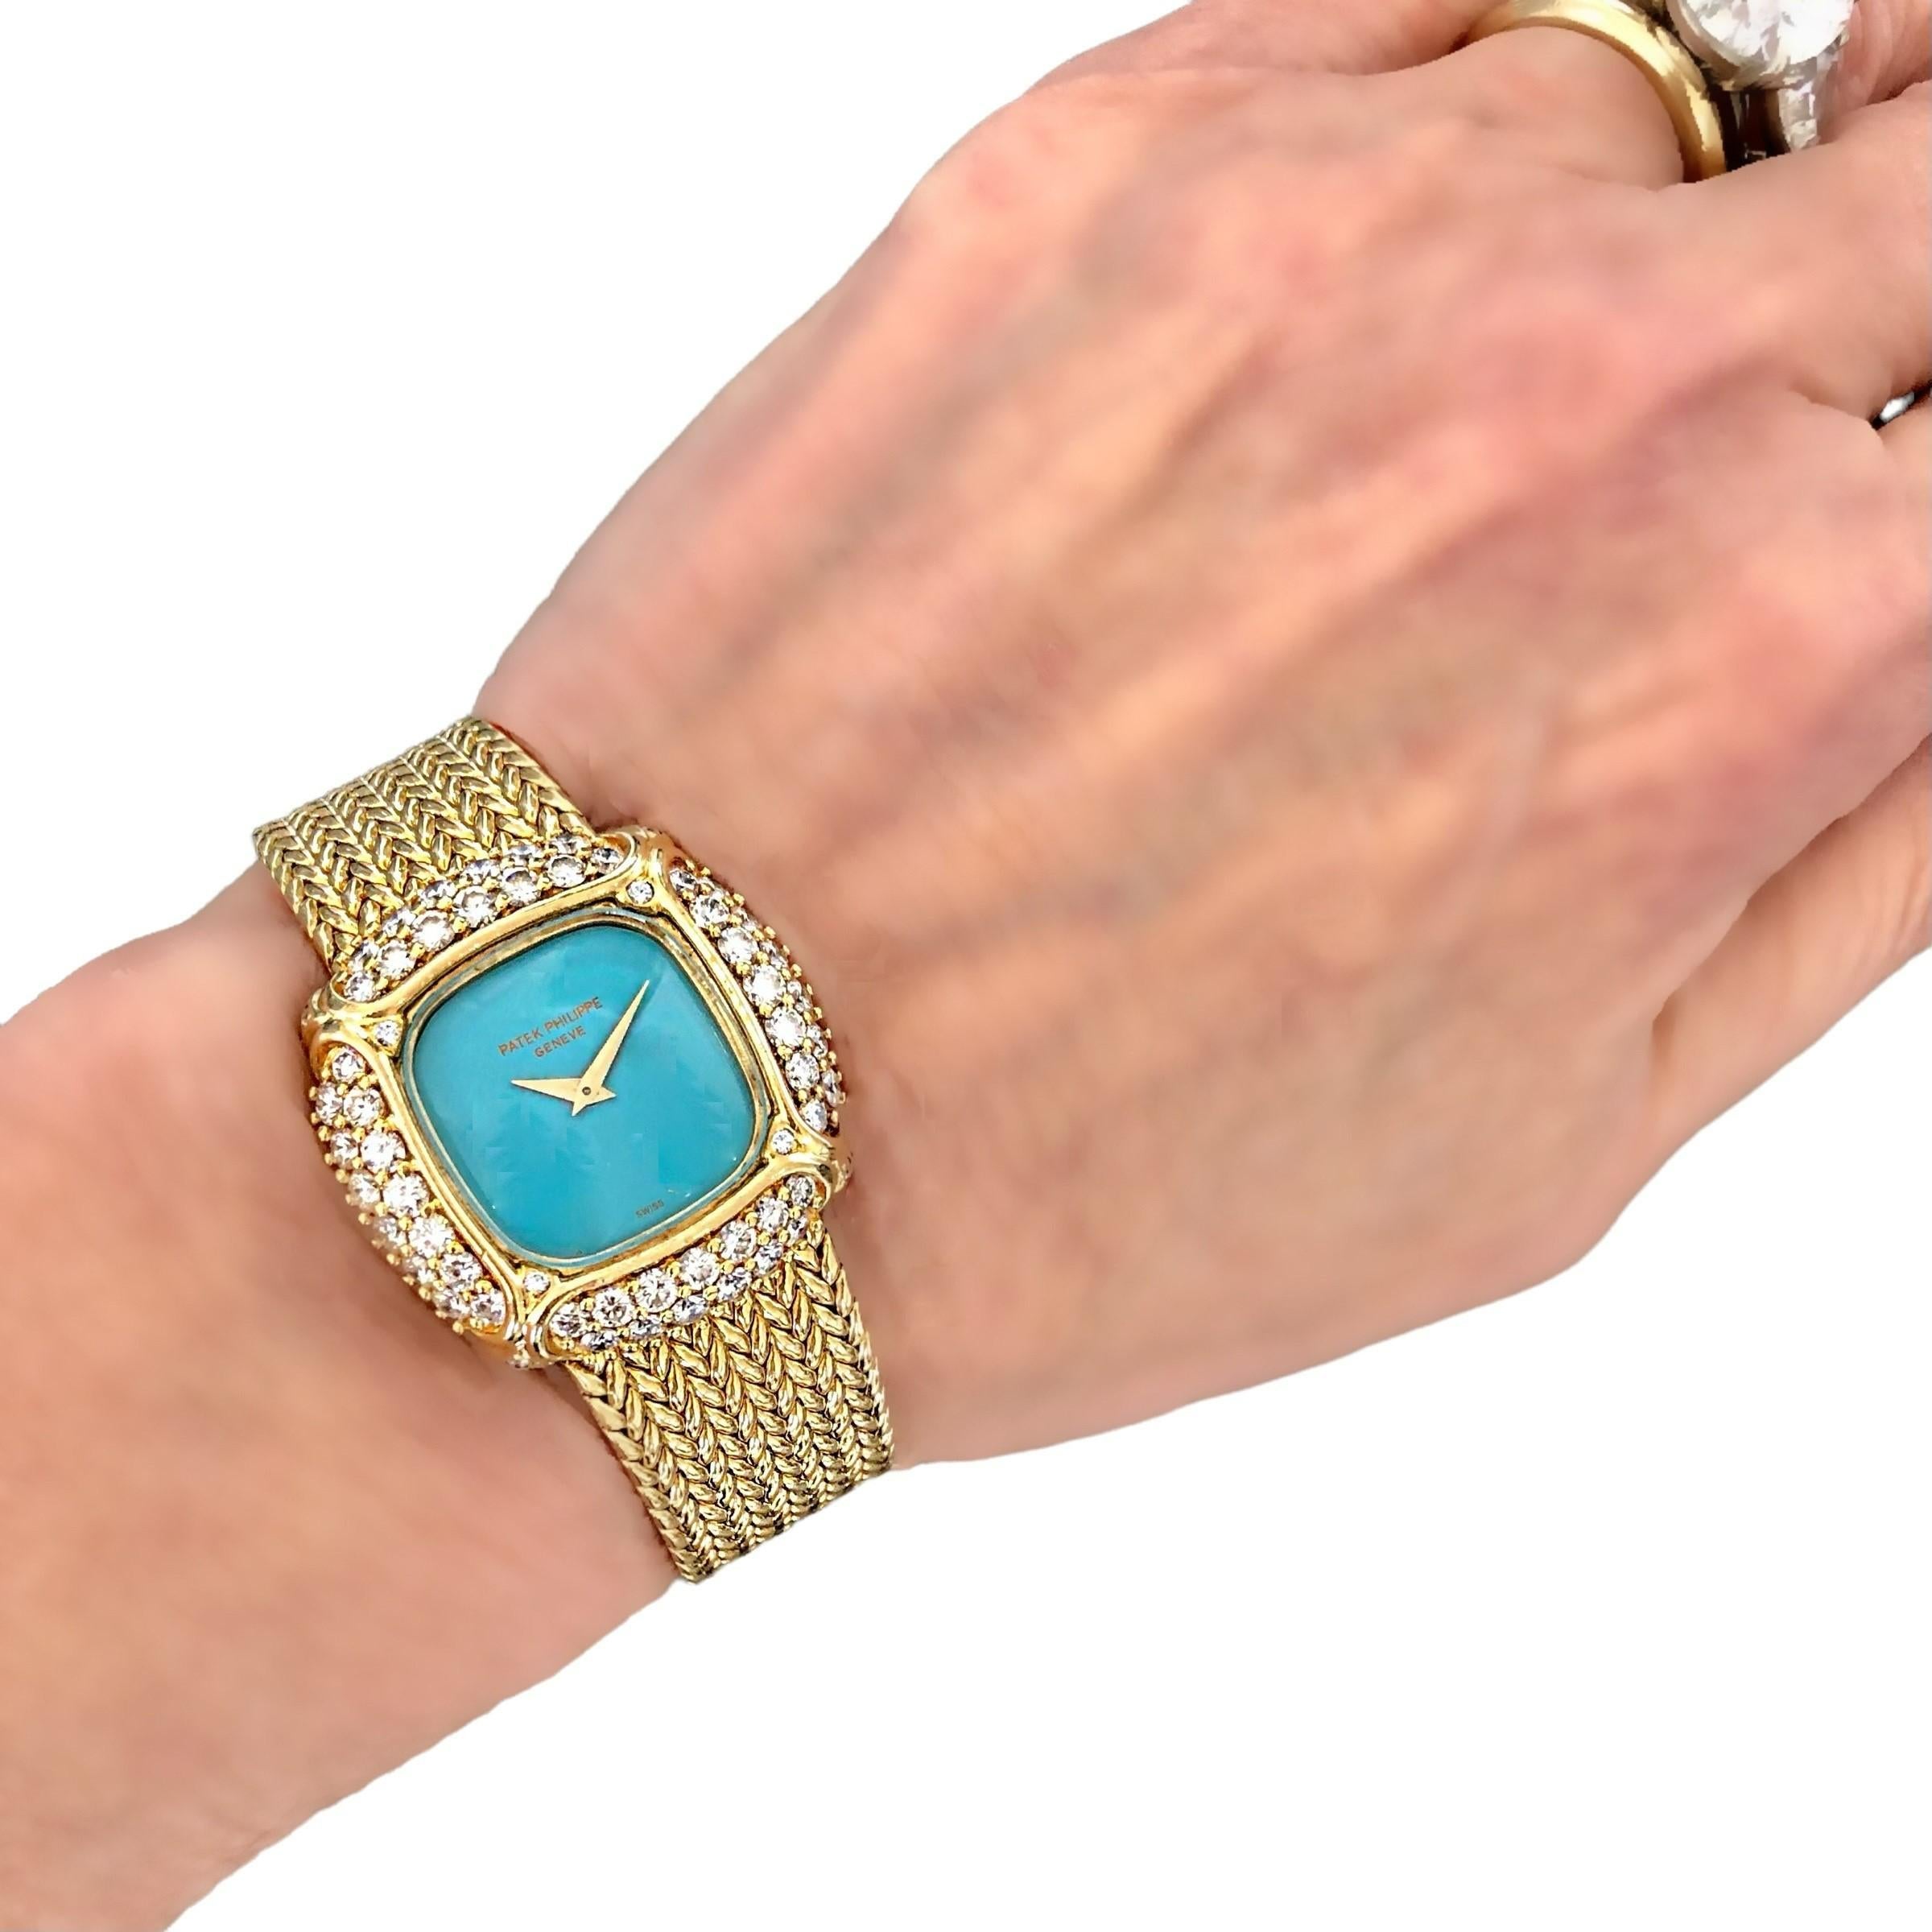 Modern Vintage Patek Philippe Ladies 18k Yellow Gold, Diamond and Turquoise Wrist Watch